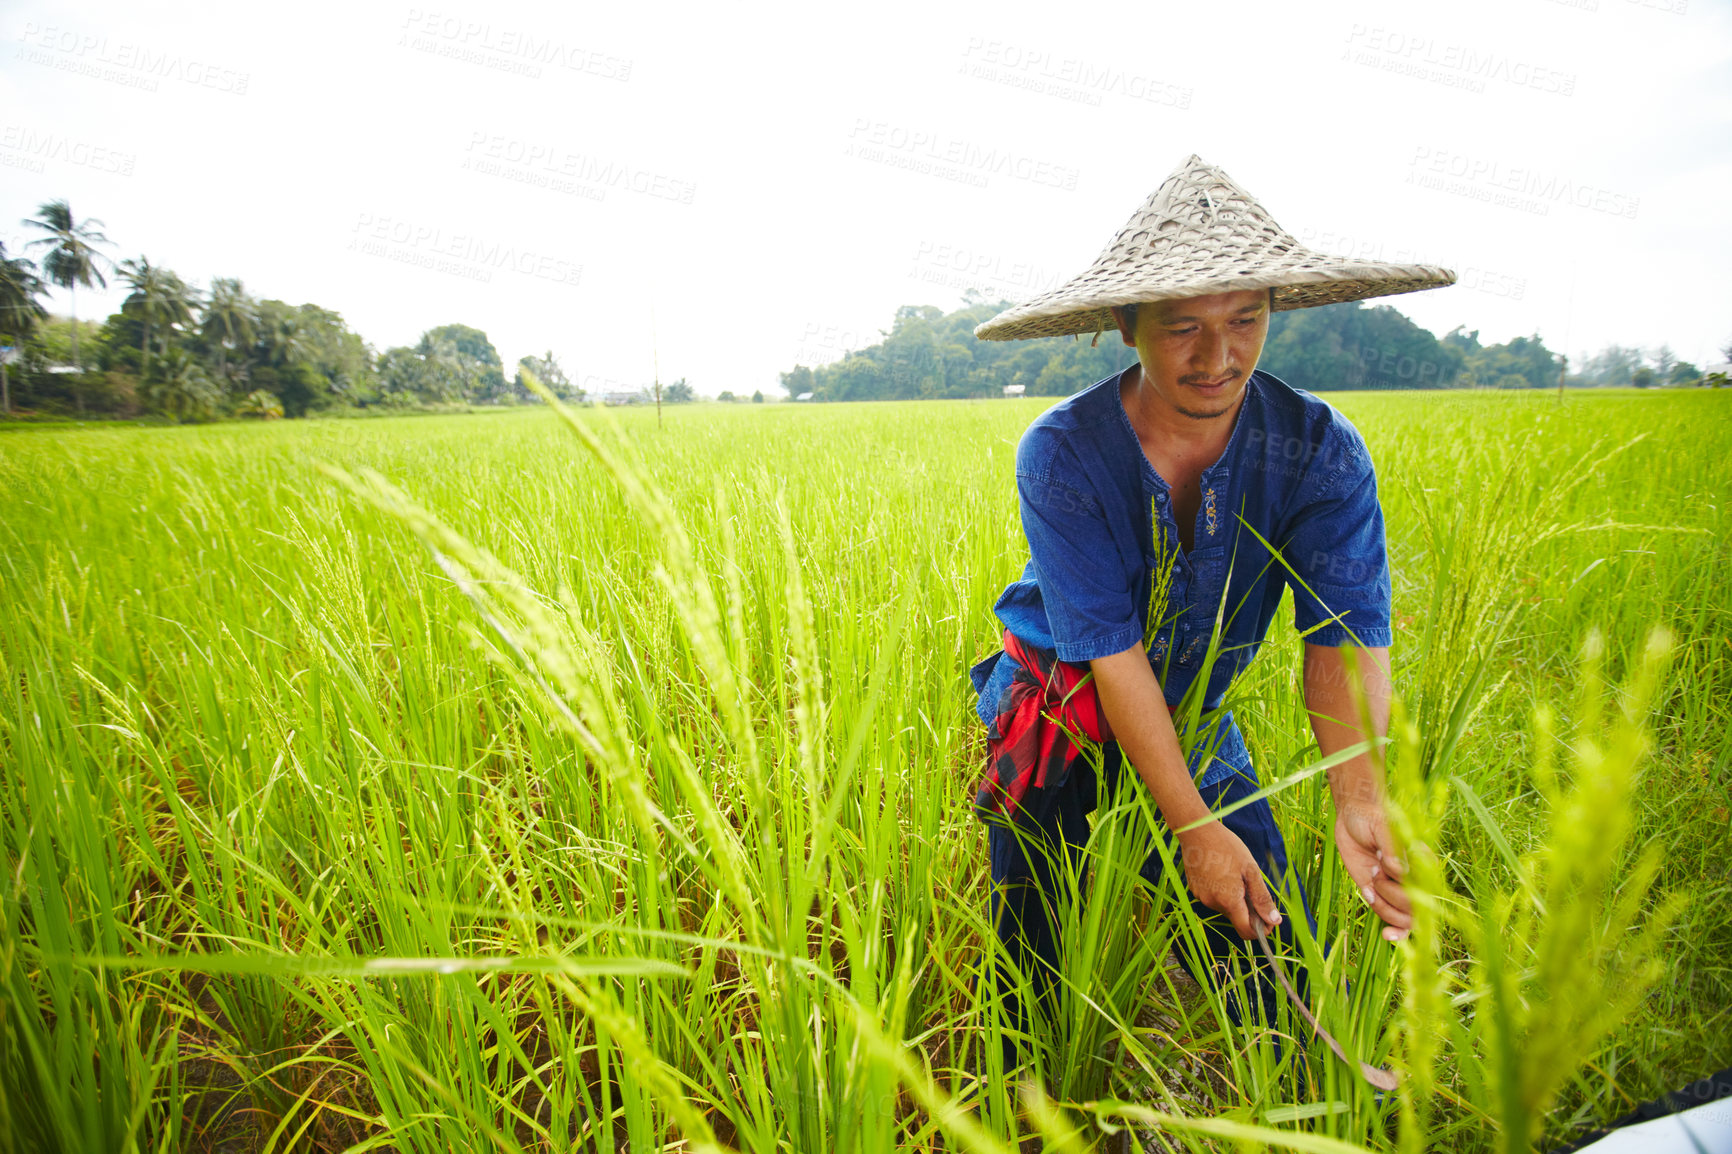 Buy stock photo A Thai rice farmer harvesting rice in a field - Thailand